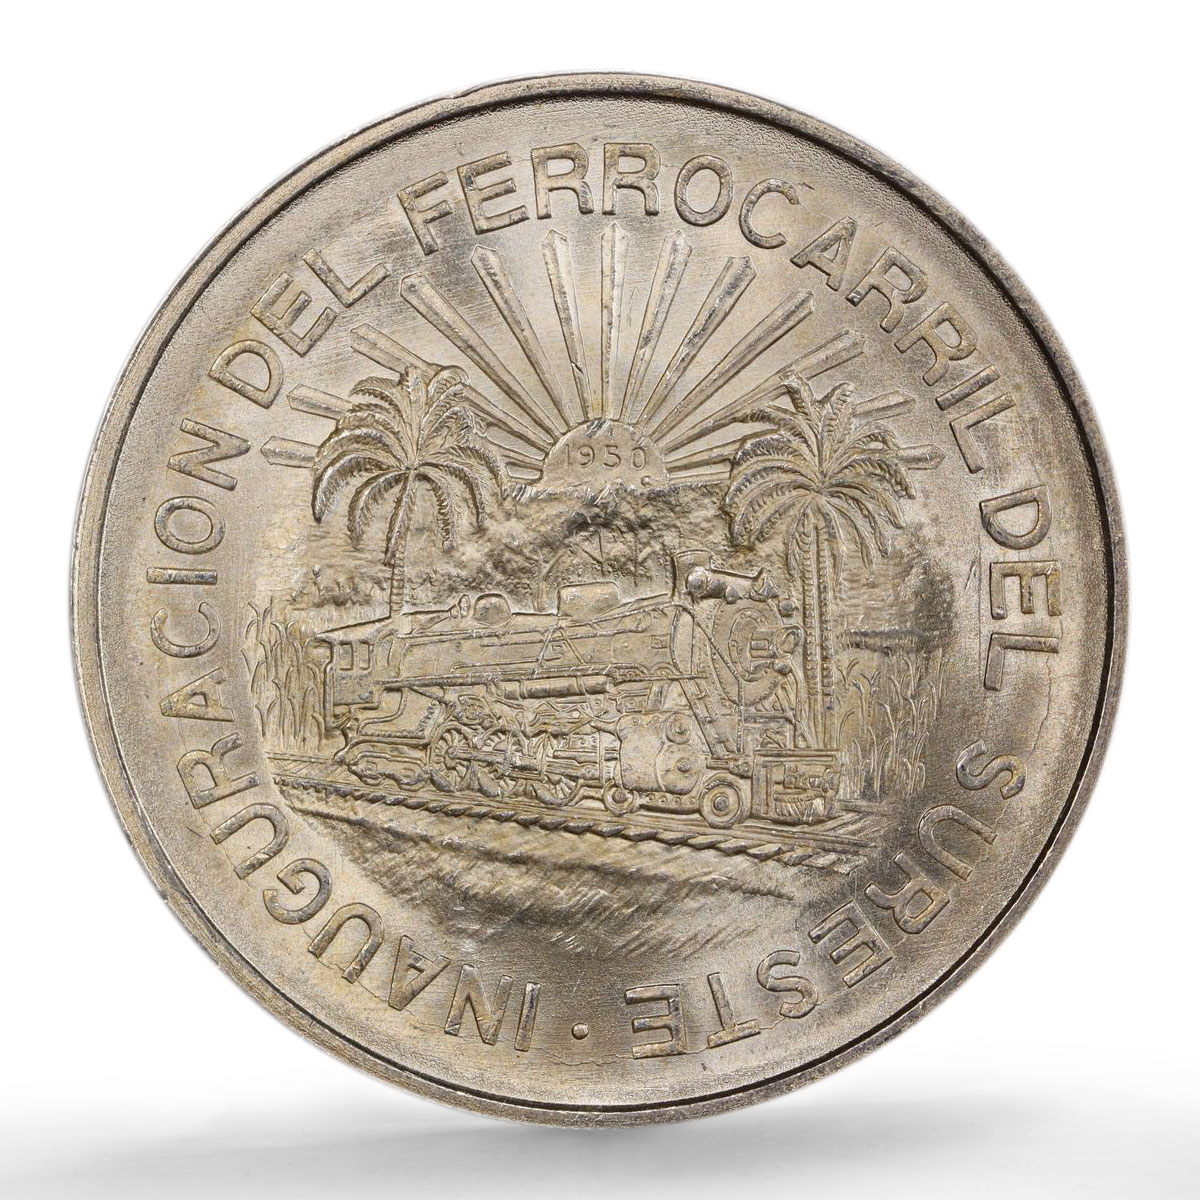 Mexico 5 pesos Opening Southeastern Railroad Train MS65 PCGS silver coin 1950